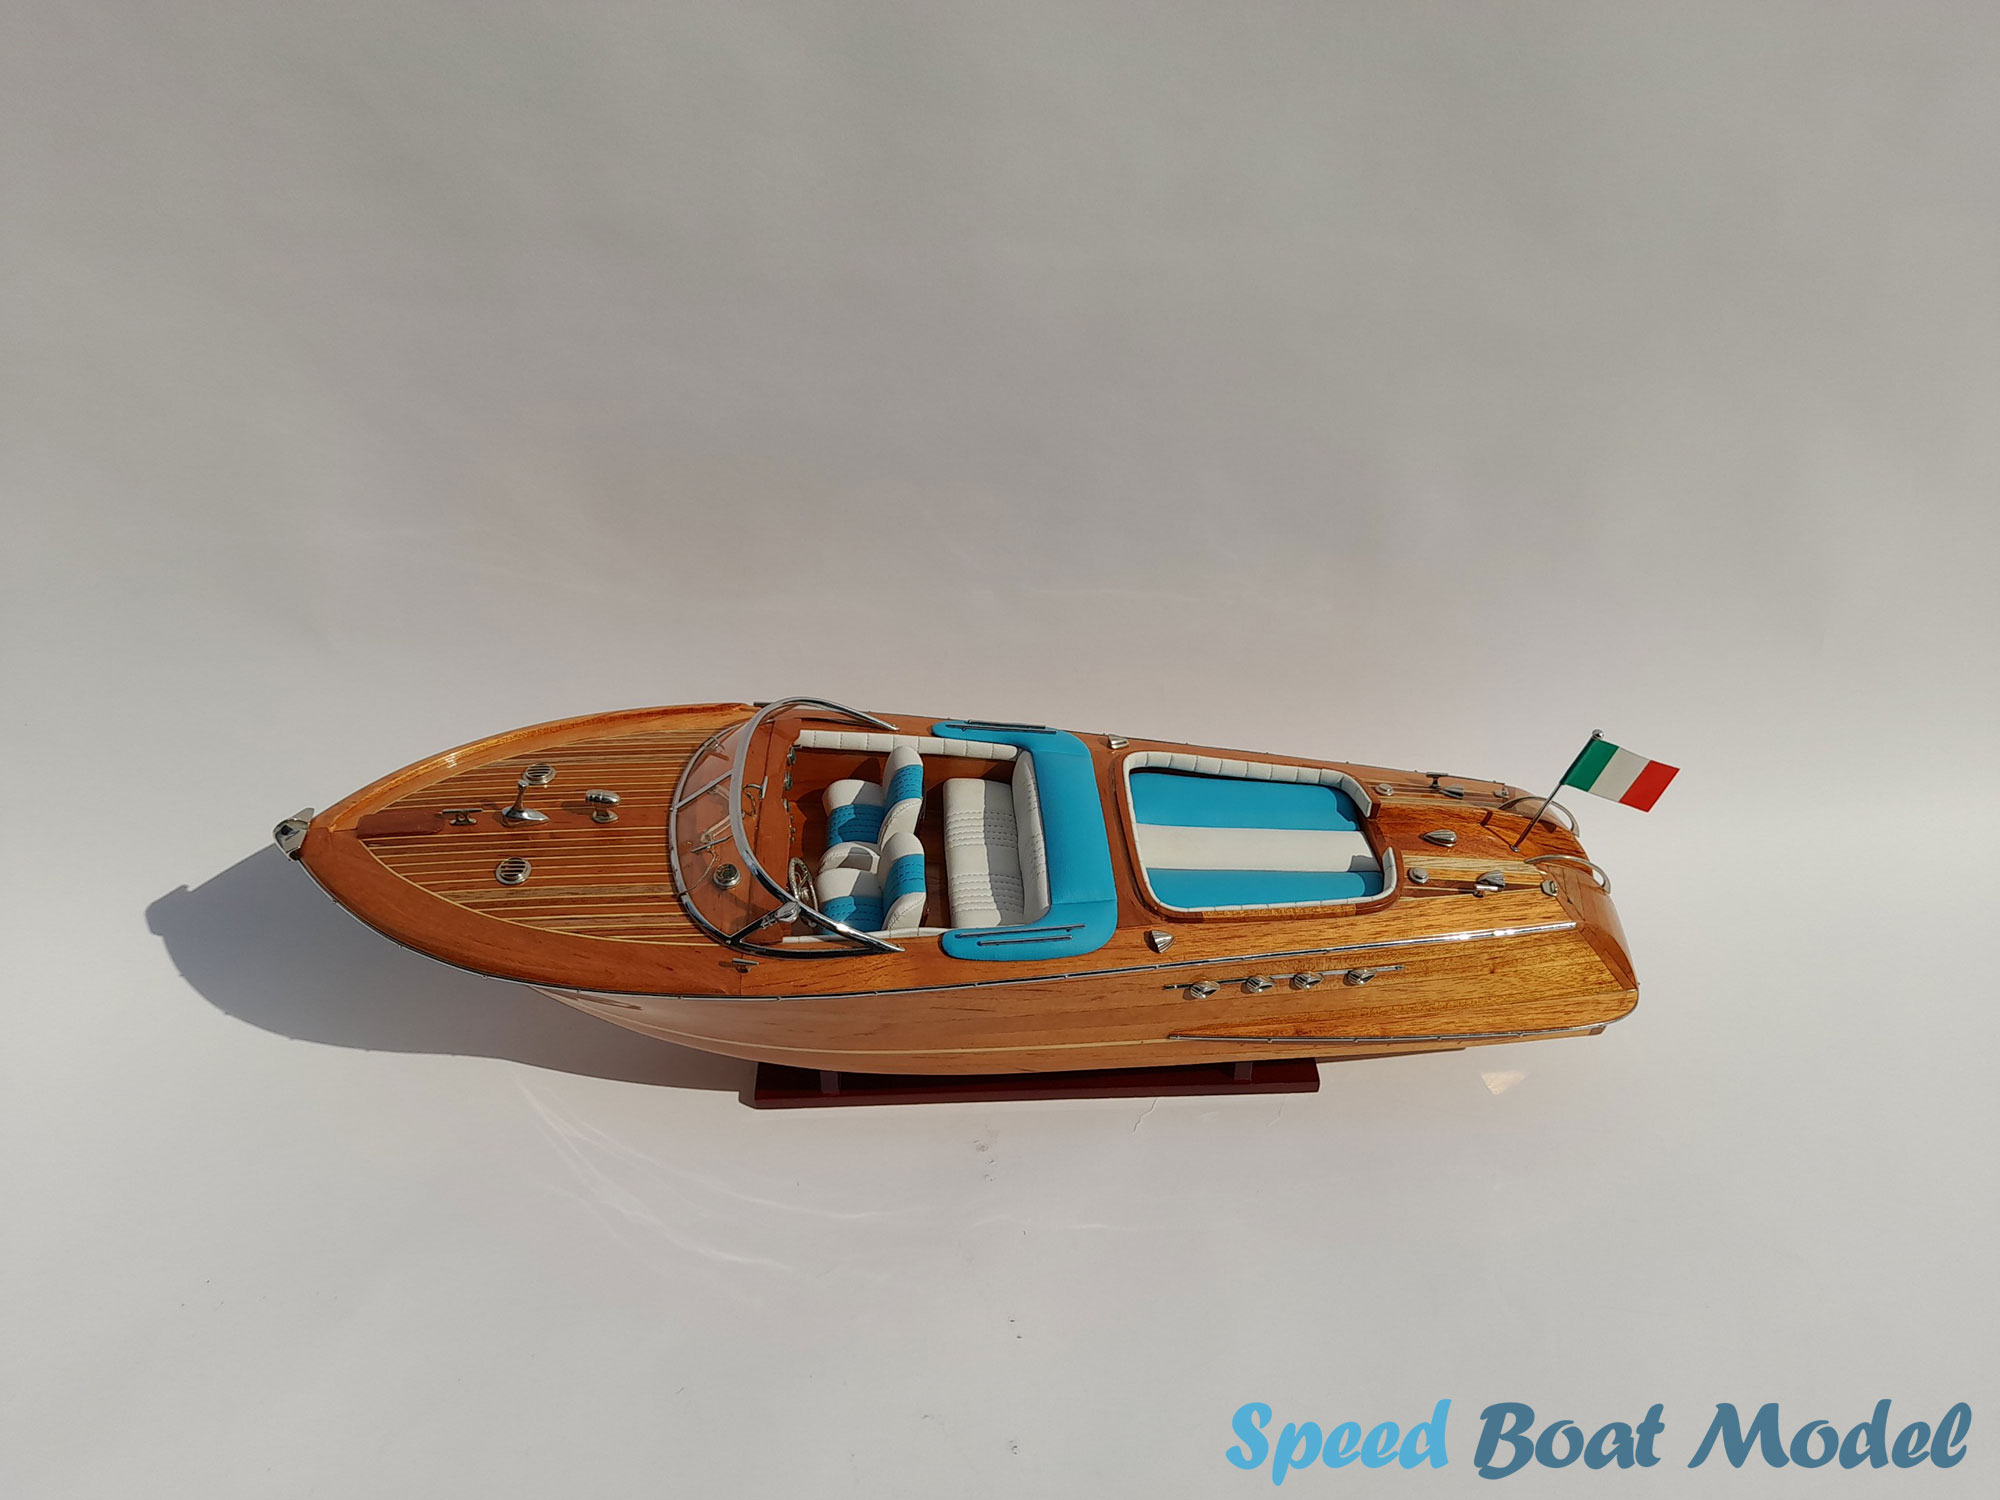 Riva Aquarama Wood Finshed Classic Speed Boat 34.2